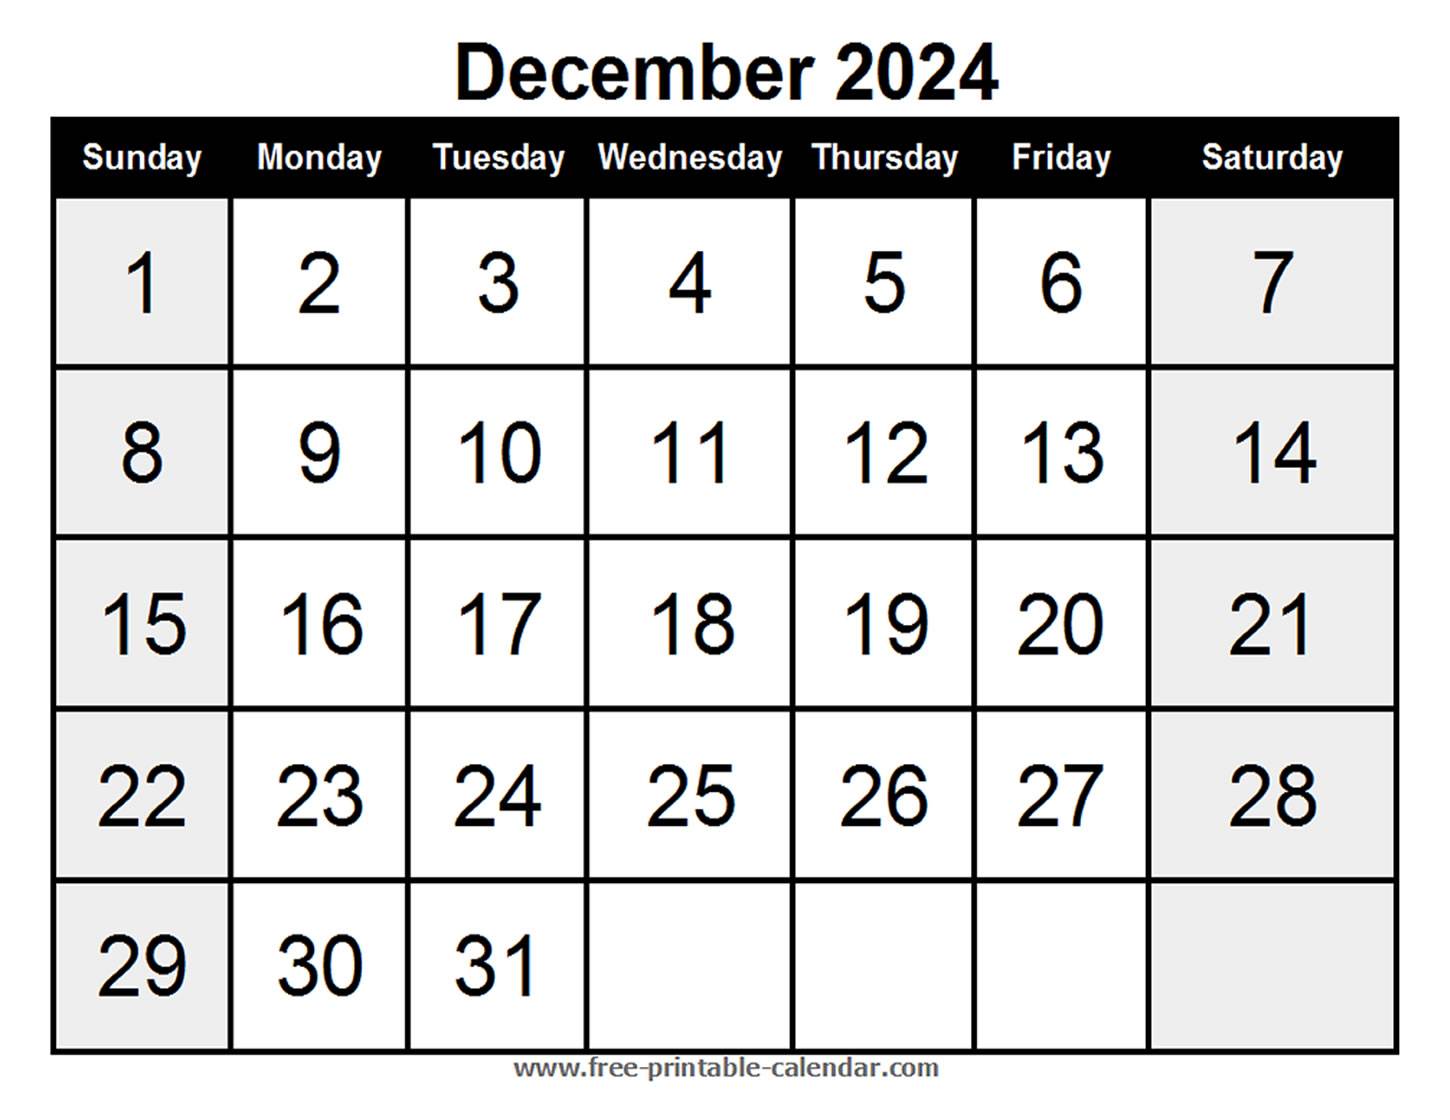 Blank Calendar December 2024 - Free-printable-calendar.com